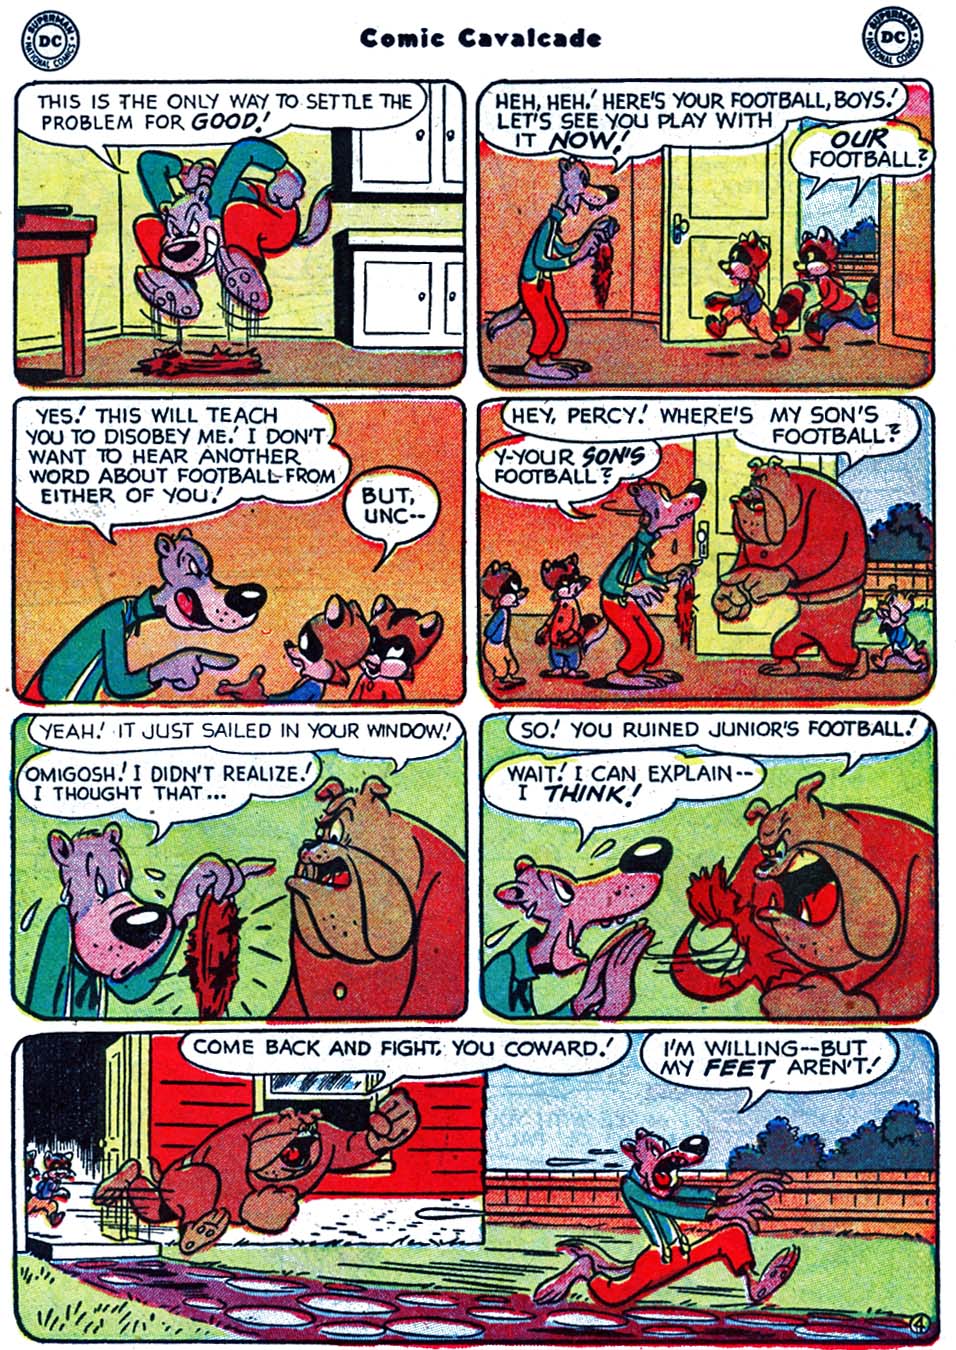 Comic Cavalcade issue 51 - Page 21